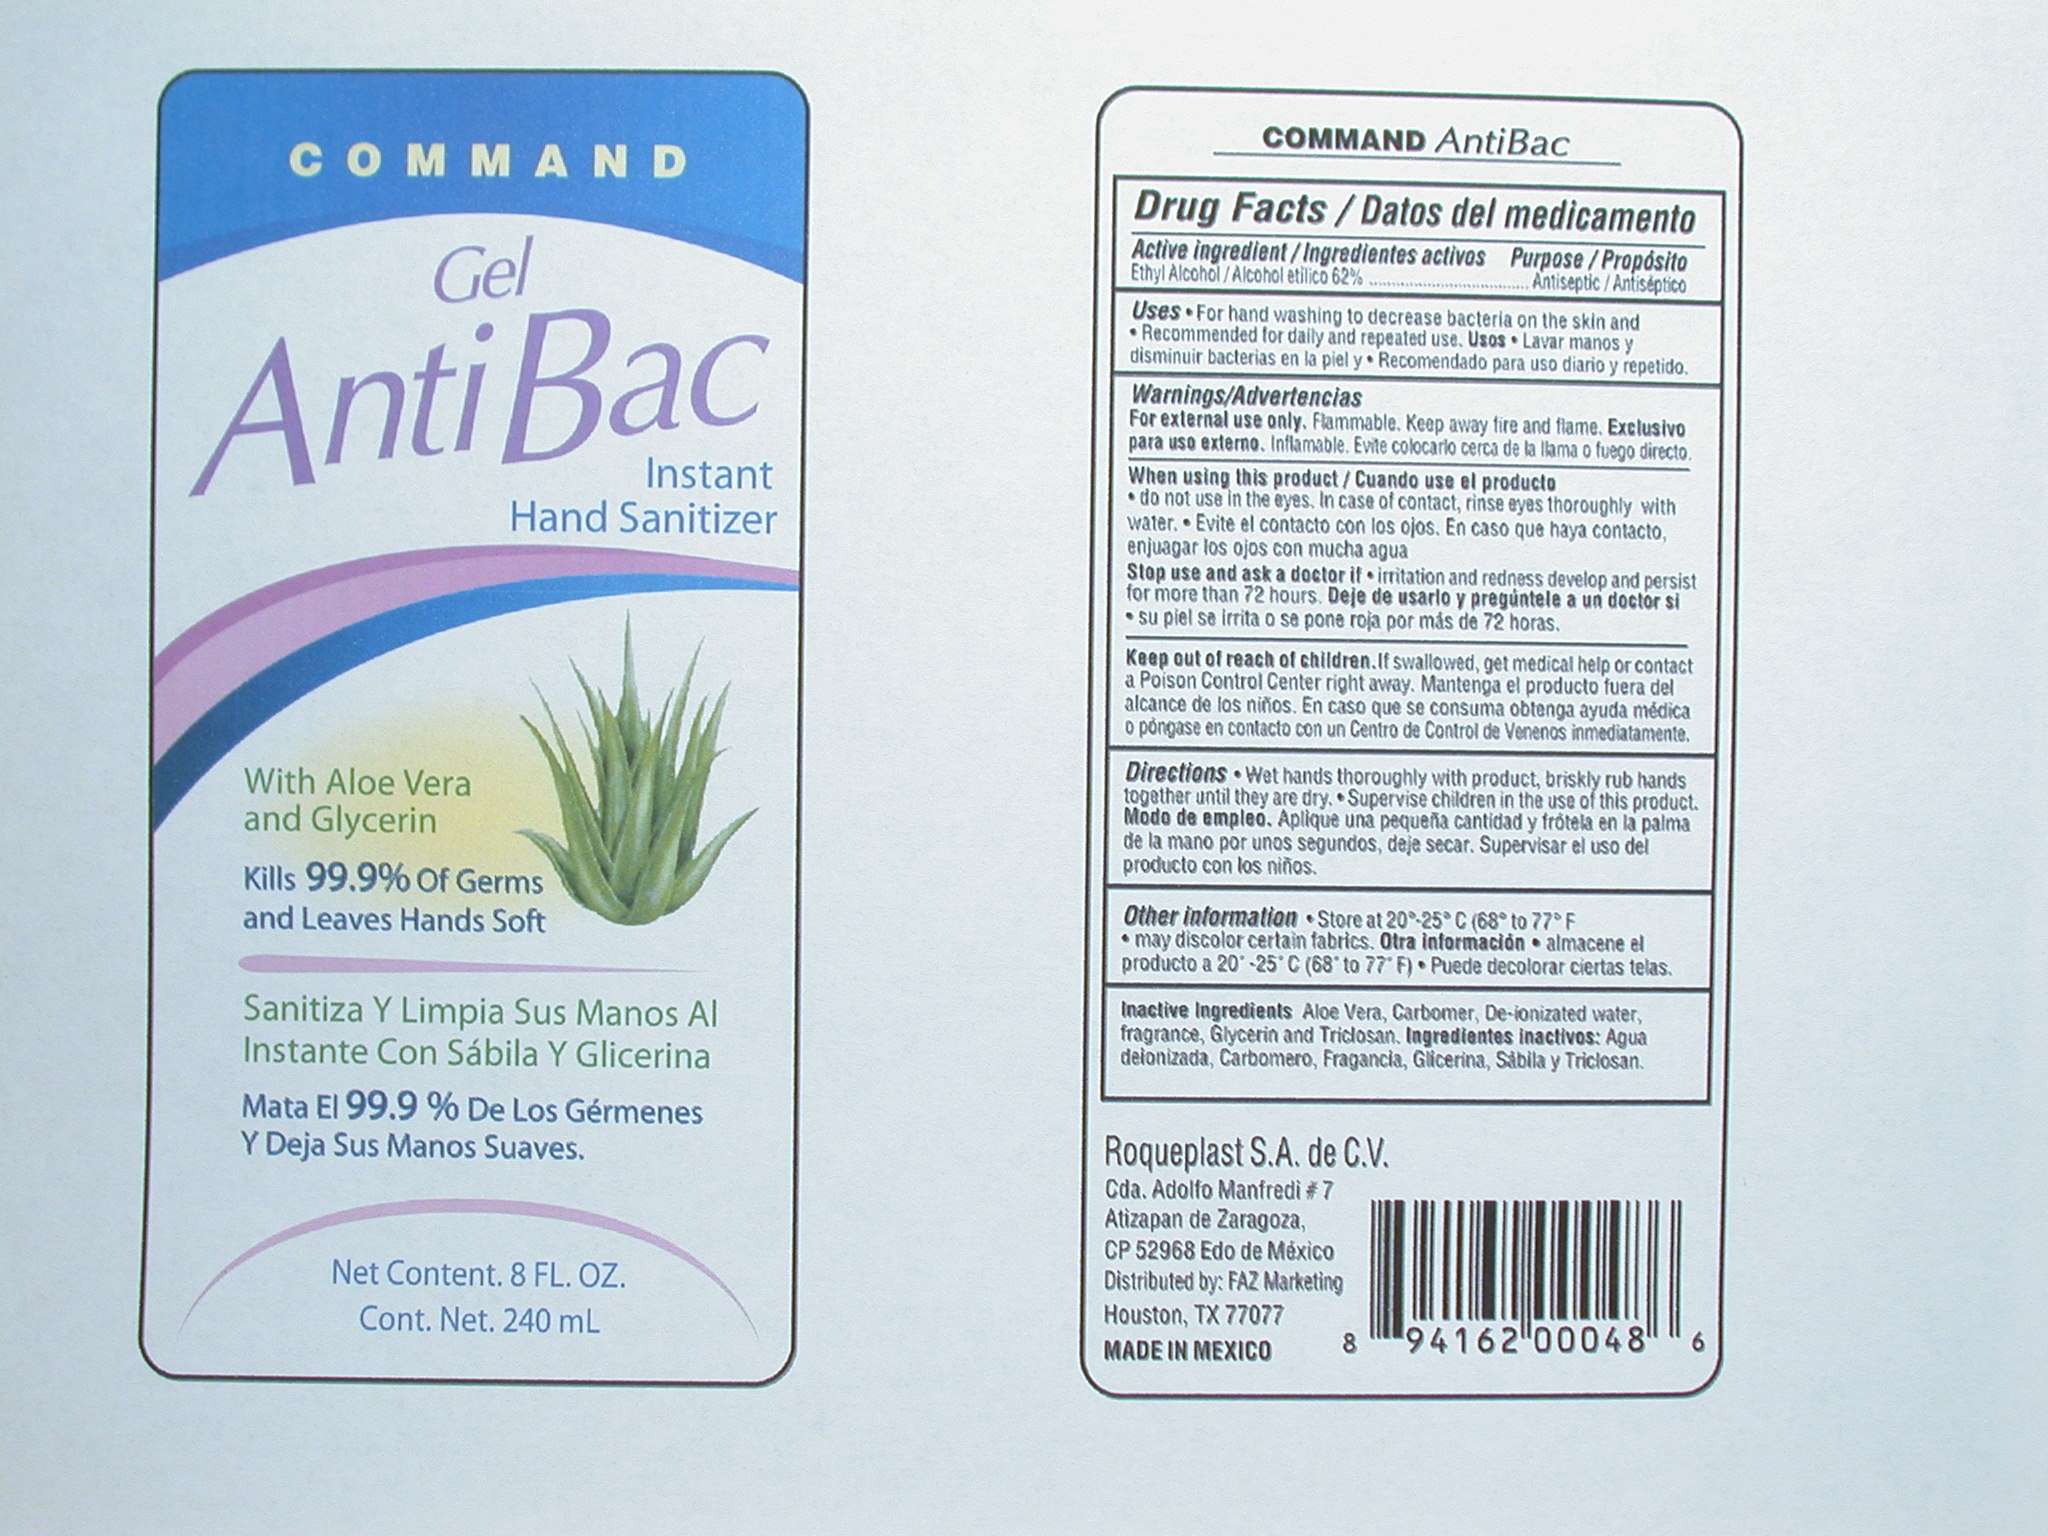 Command AntiBac Instant Hand Sanitizer